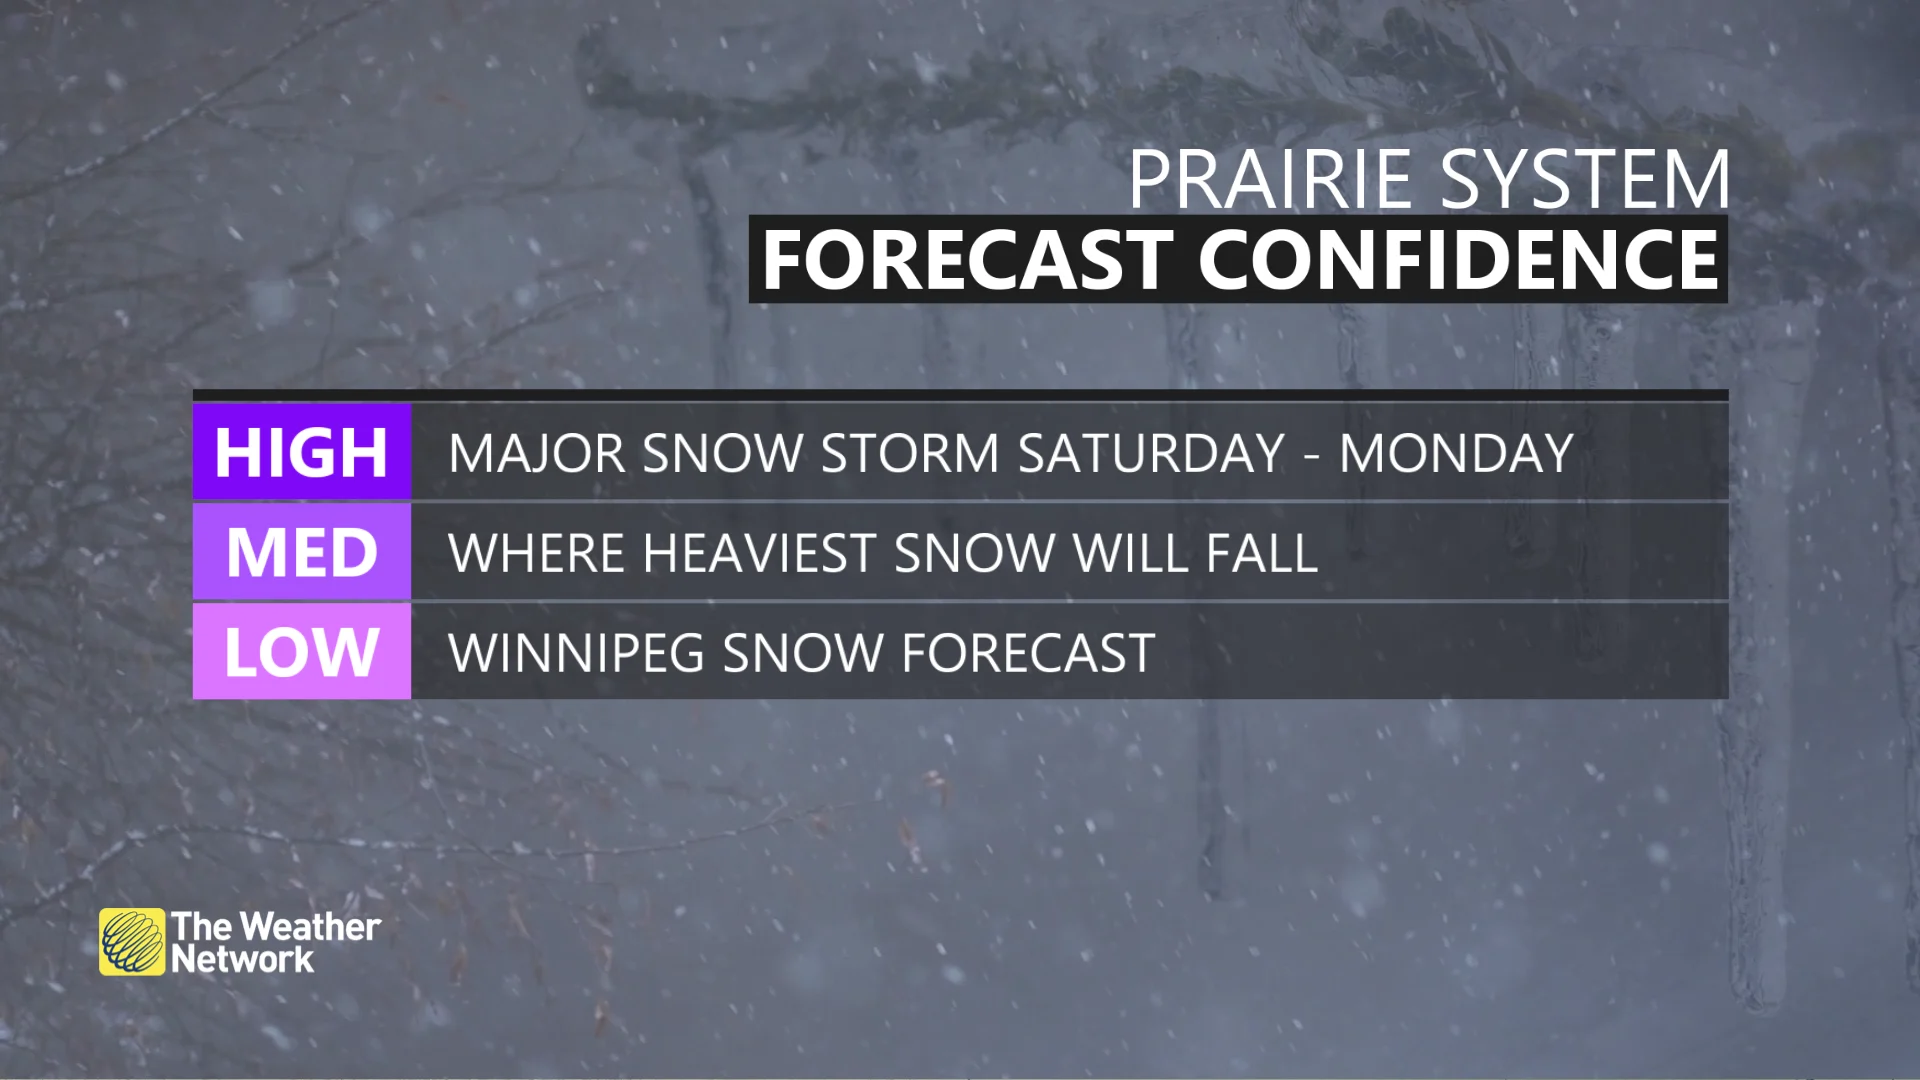 Prairies snowstorm forecast confidence